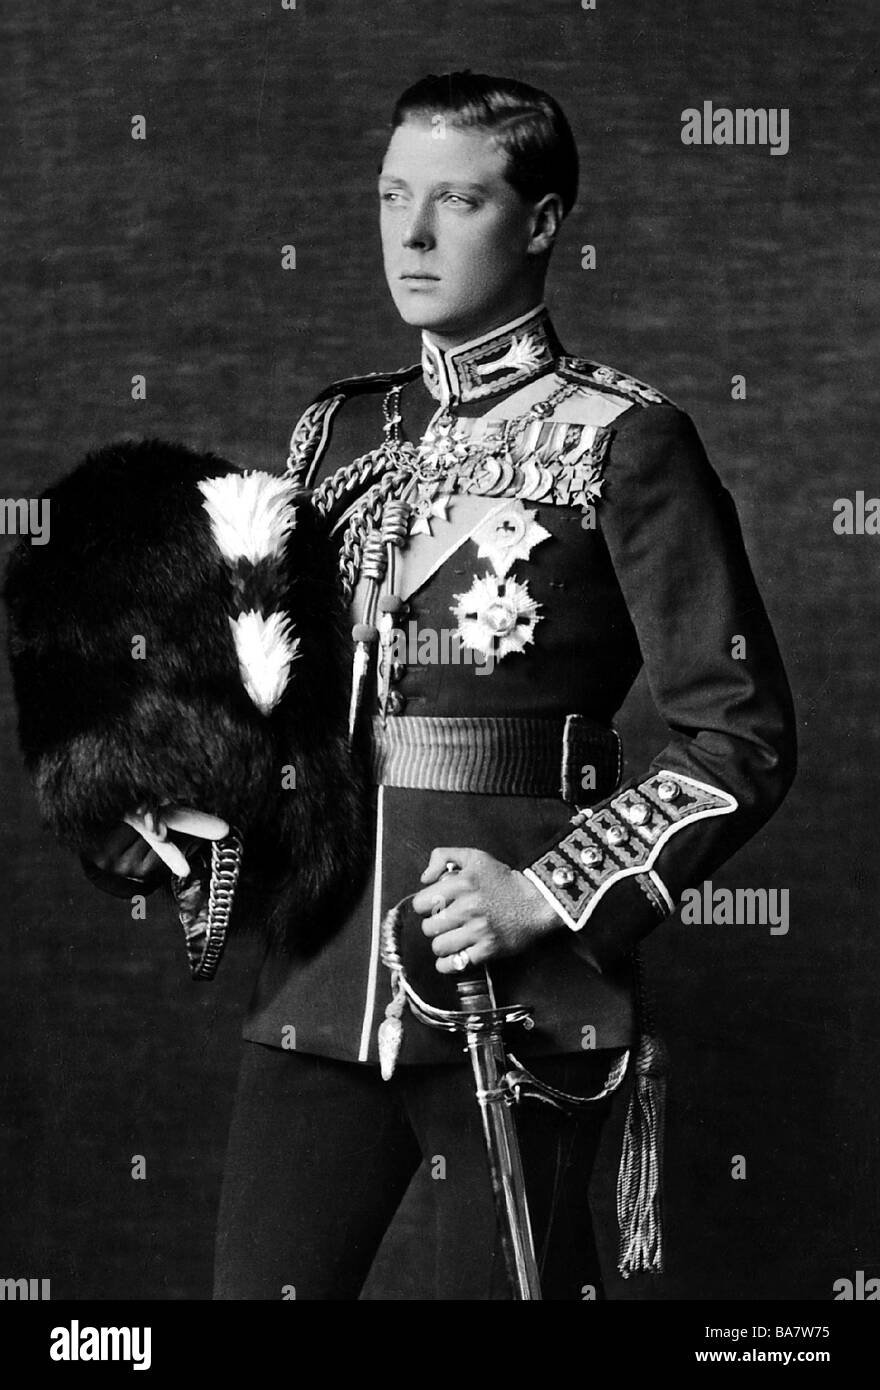 Edward VIII, 23.6.1894 - 28.5.1972, King of Great Britain 20.1.1936 - 11.12.1936, portrai, postcard, 1919, , Stock Photo